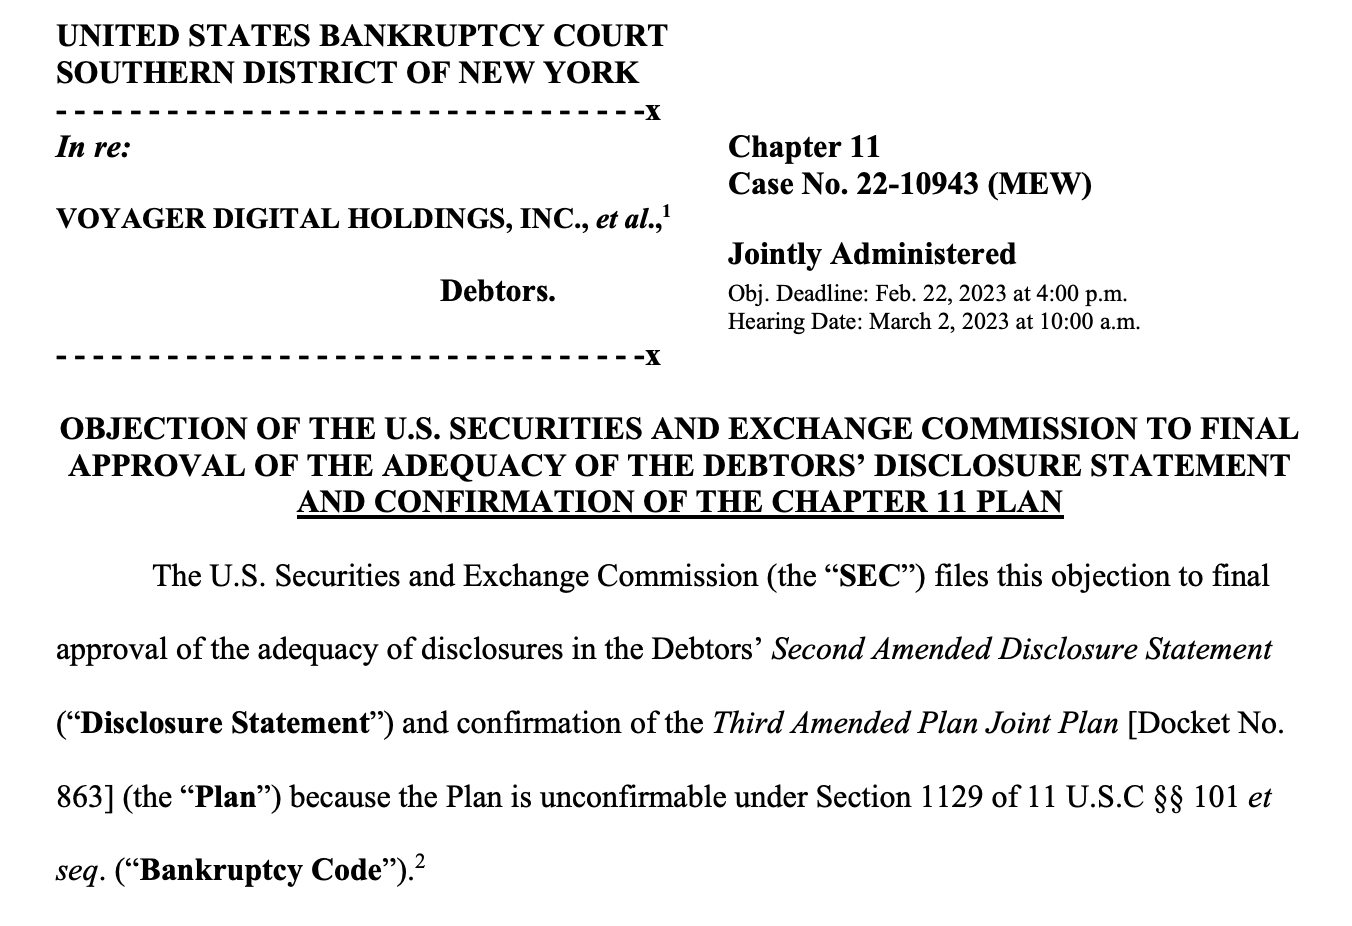 Feb 22 filing by the US SEC